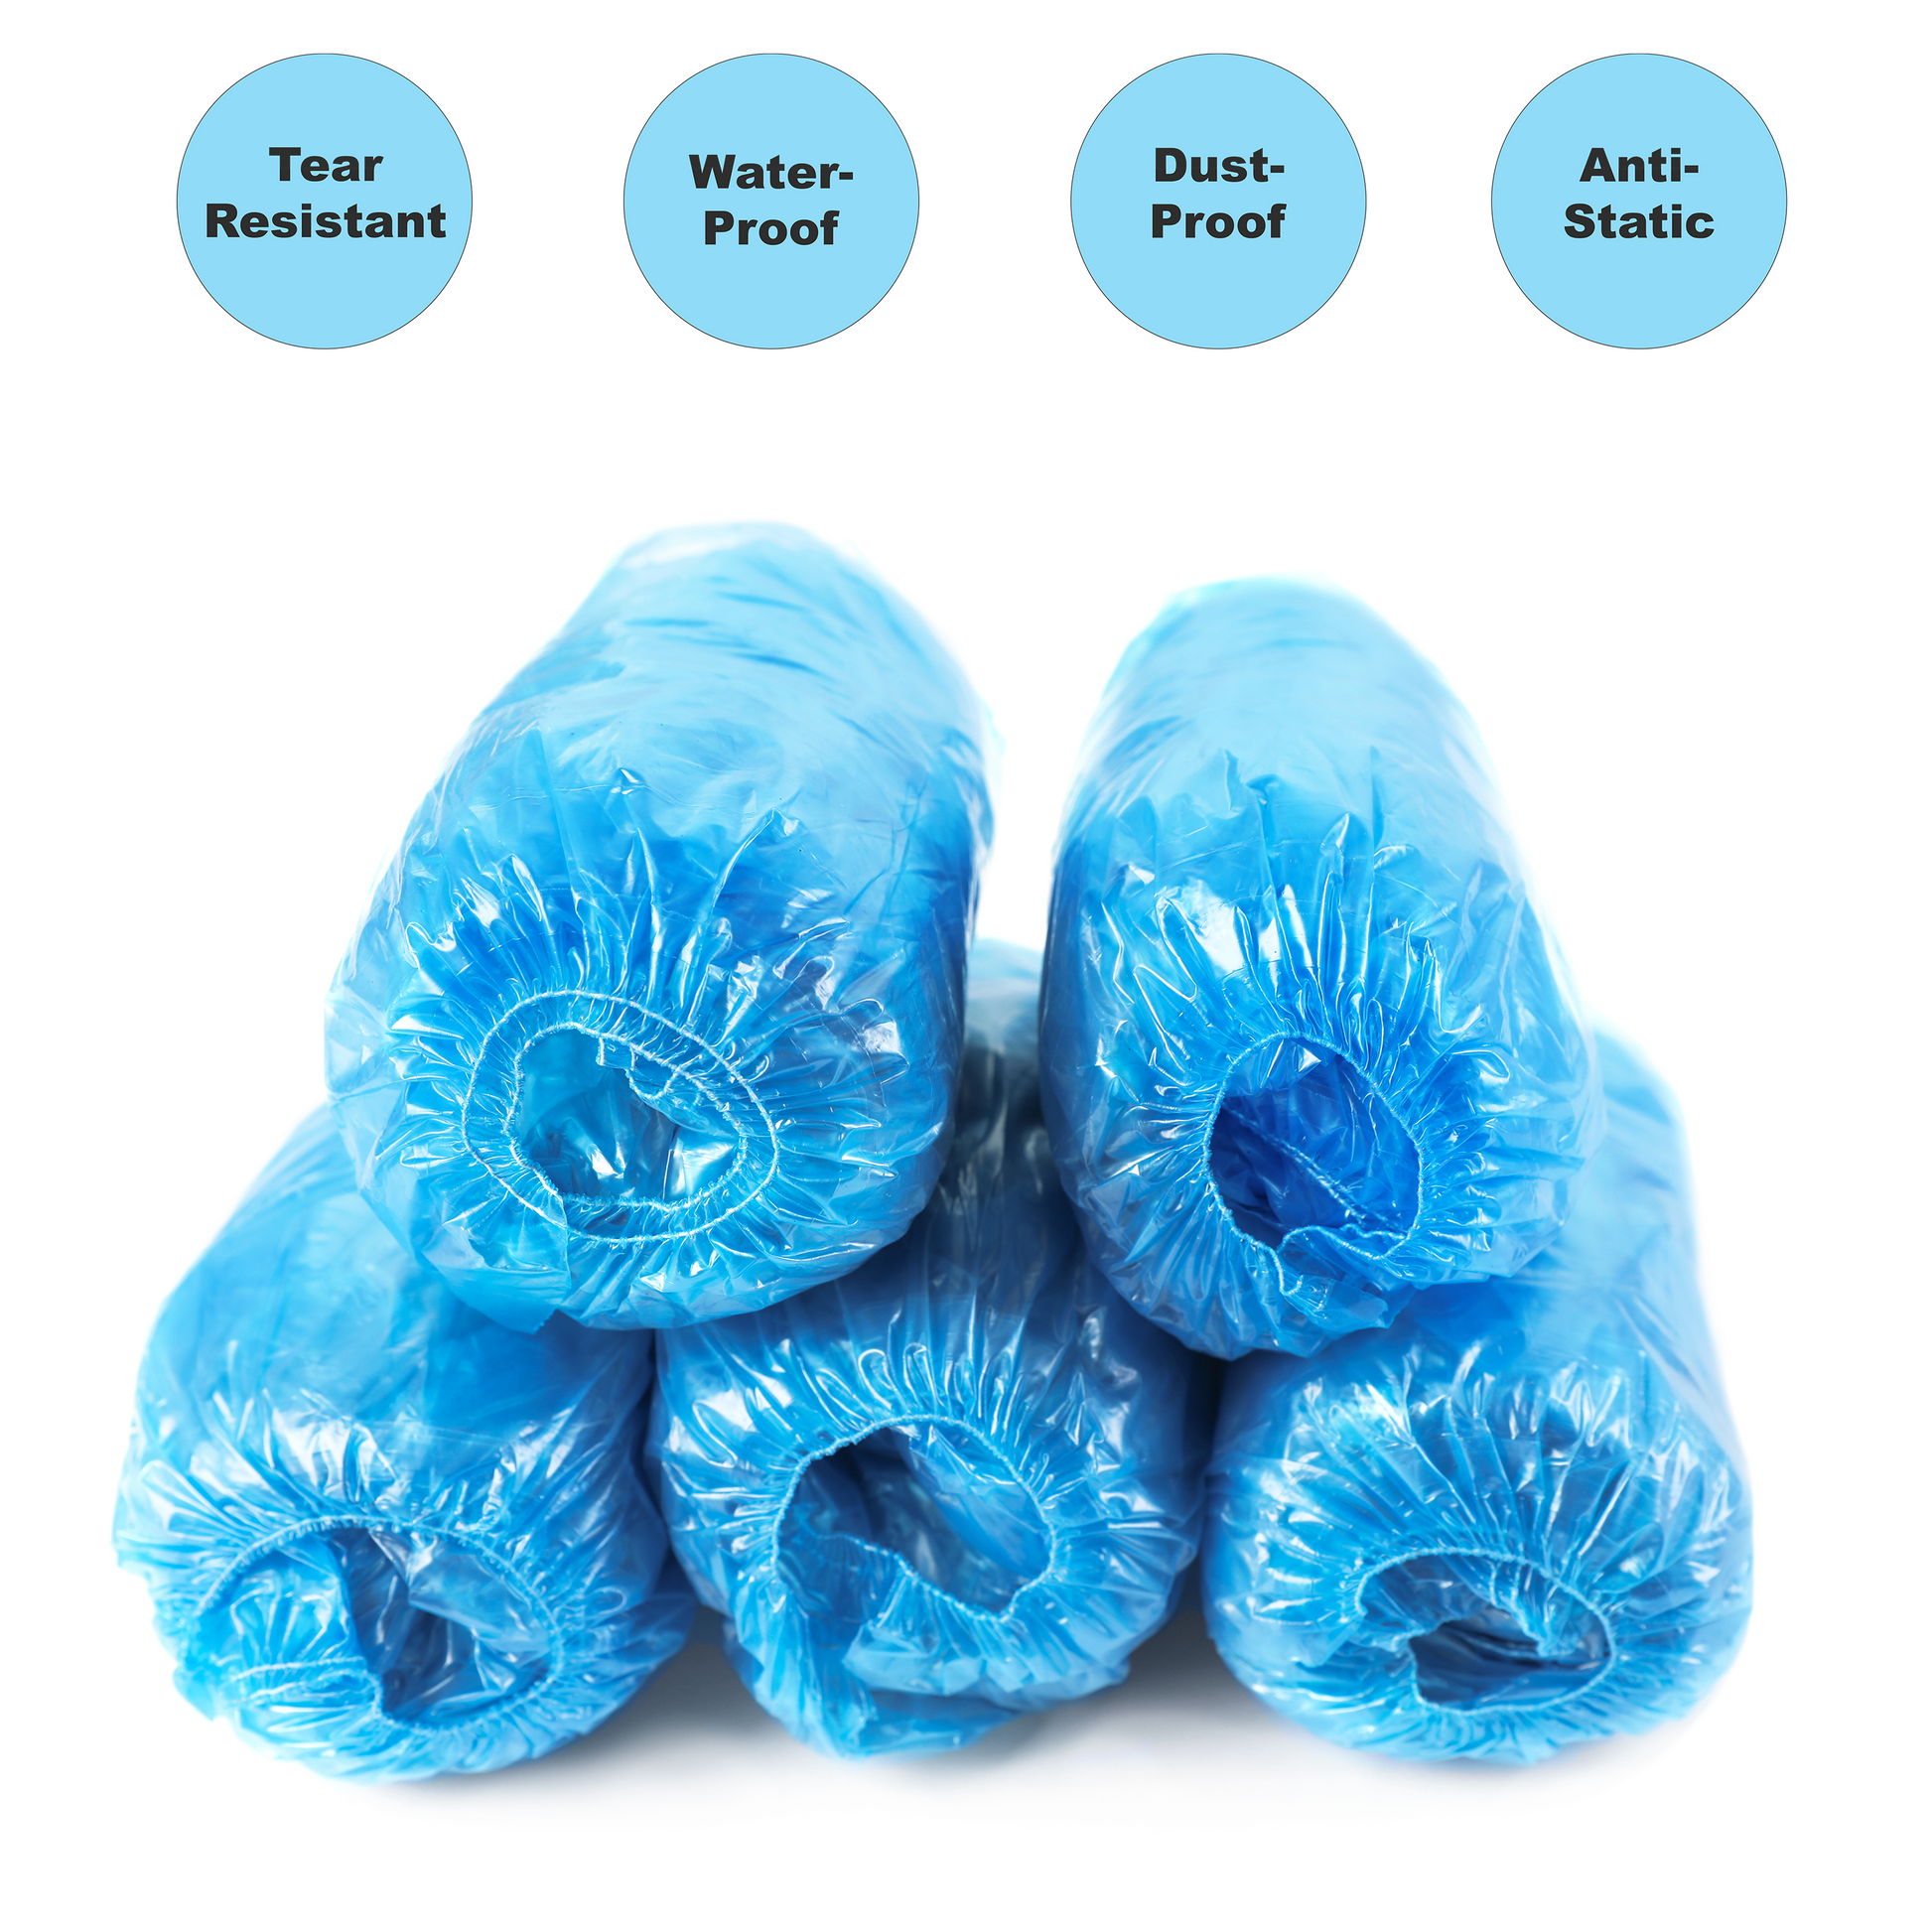 Buy Wholesale Canada Disposable Plastic Aprons Waterproof Plastic